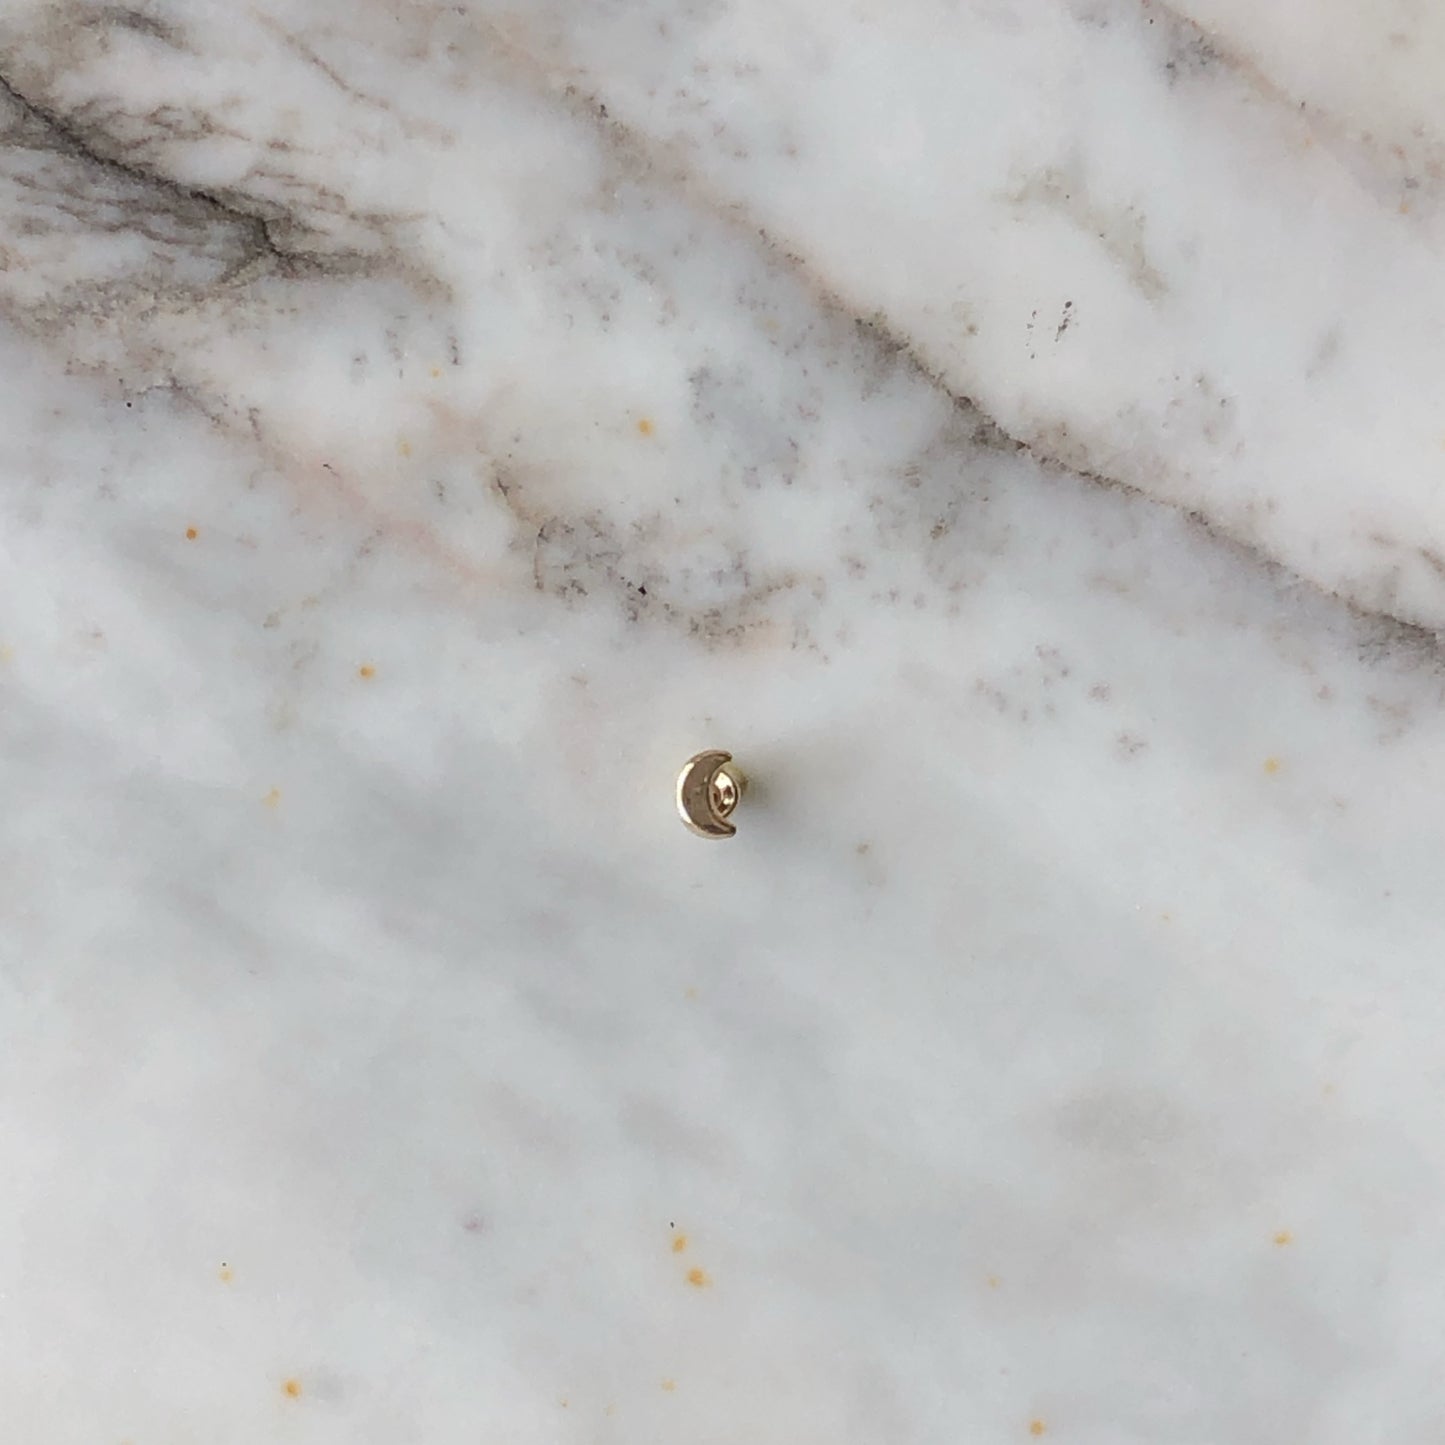 Arete single de lunita mini en oro amarillo de 14k con tope ortopédico